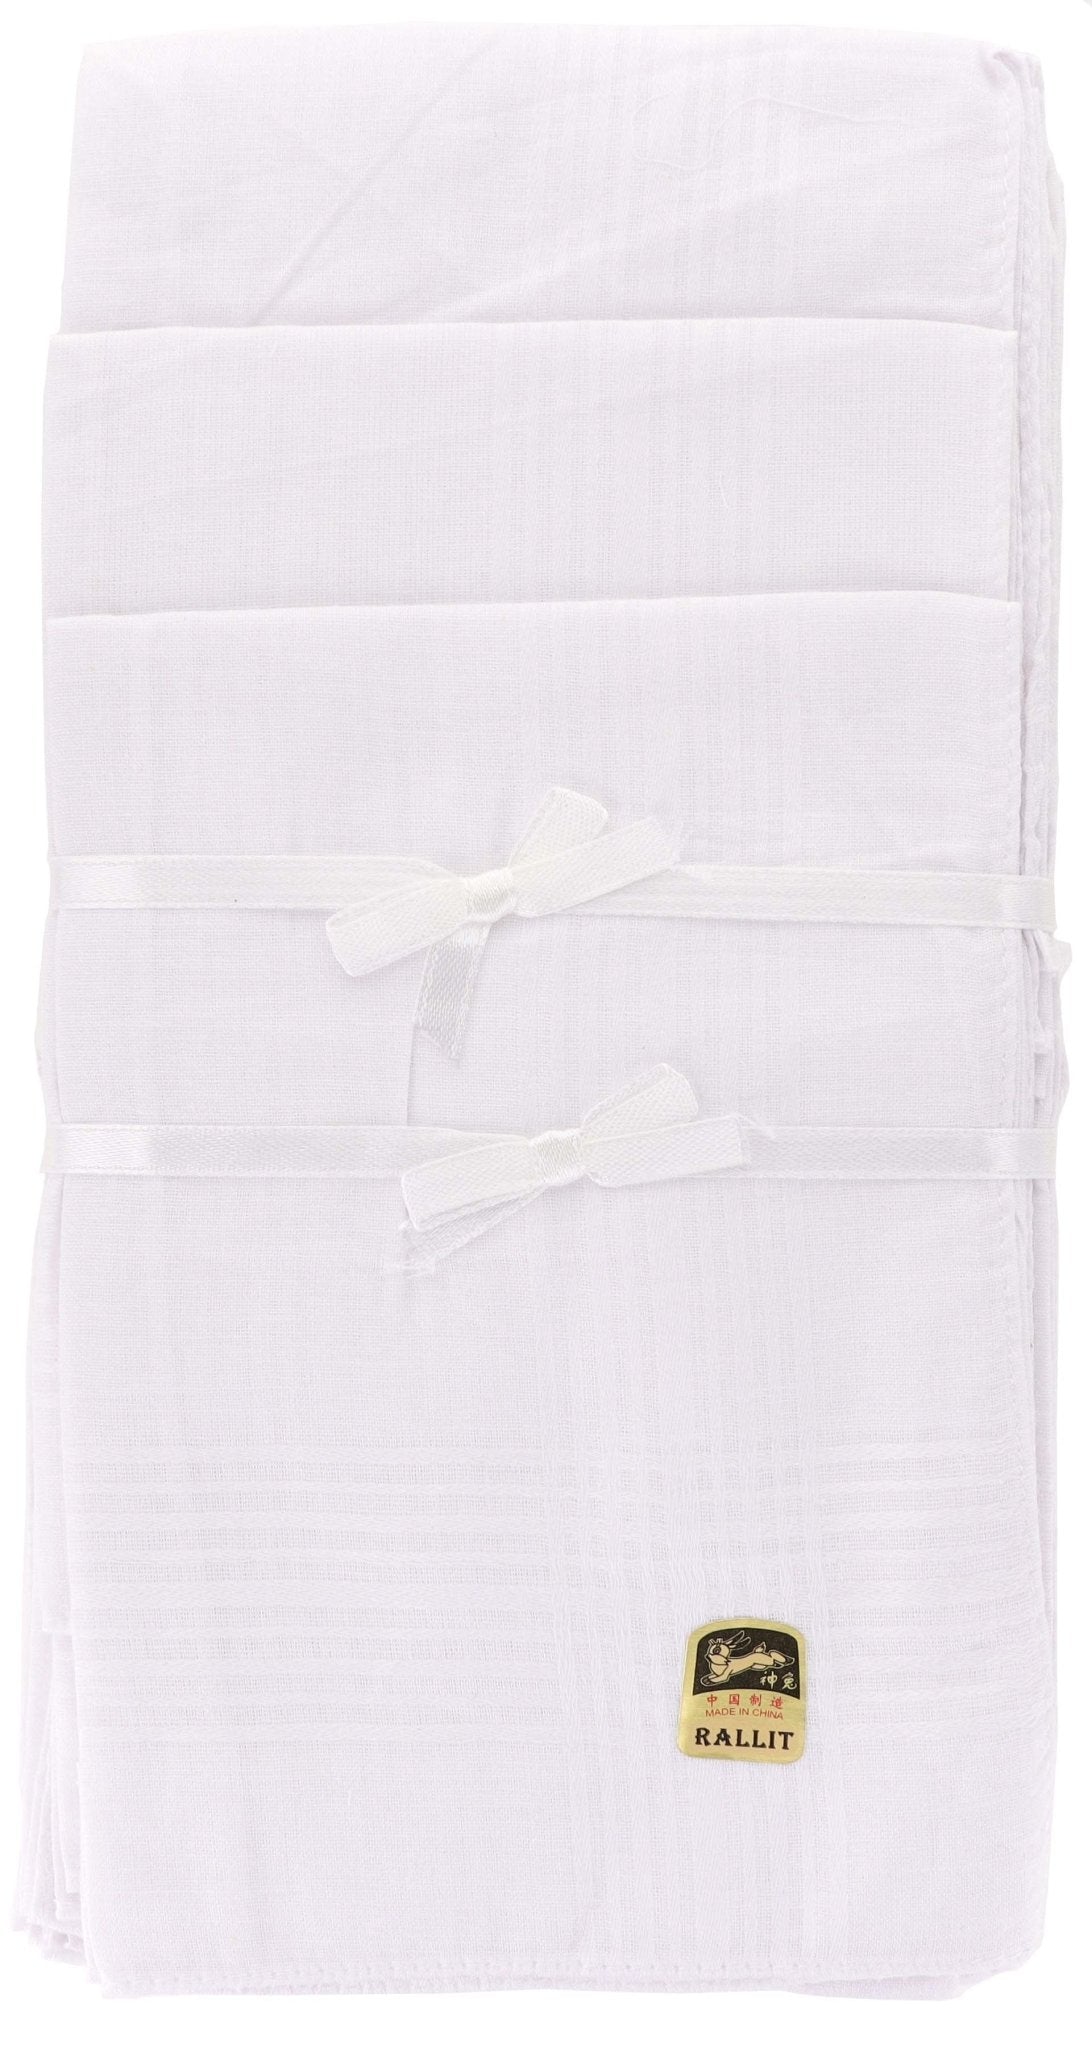 RALLIT White Cotton Handkerchief Set by Classy Cufflinks - cotton-hank-w - Classy Cufflinks